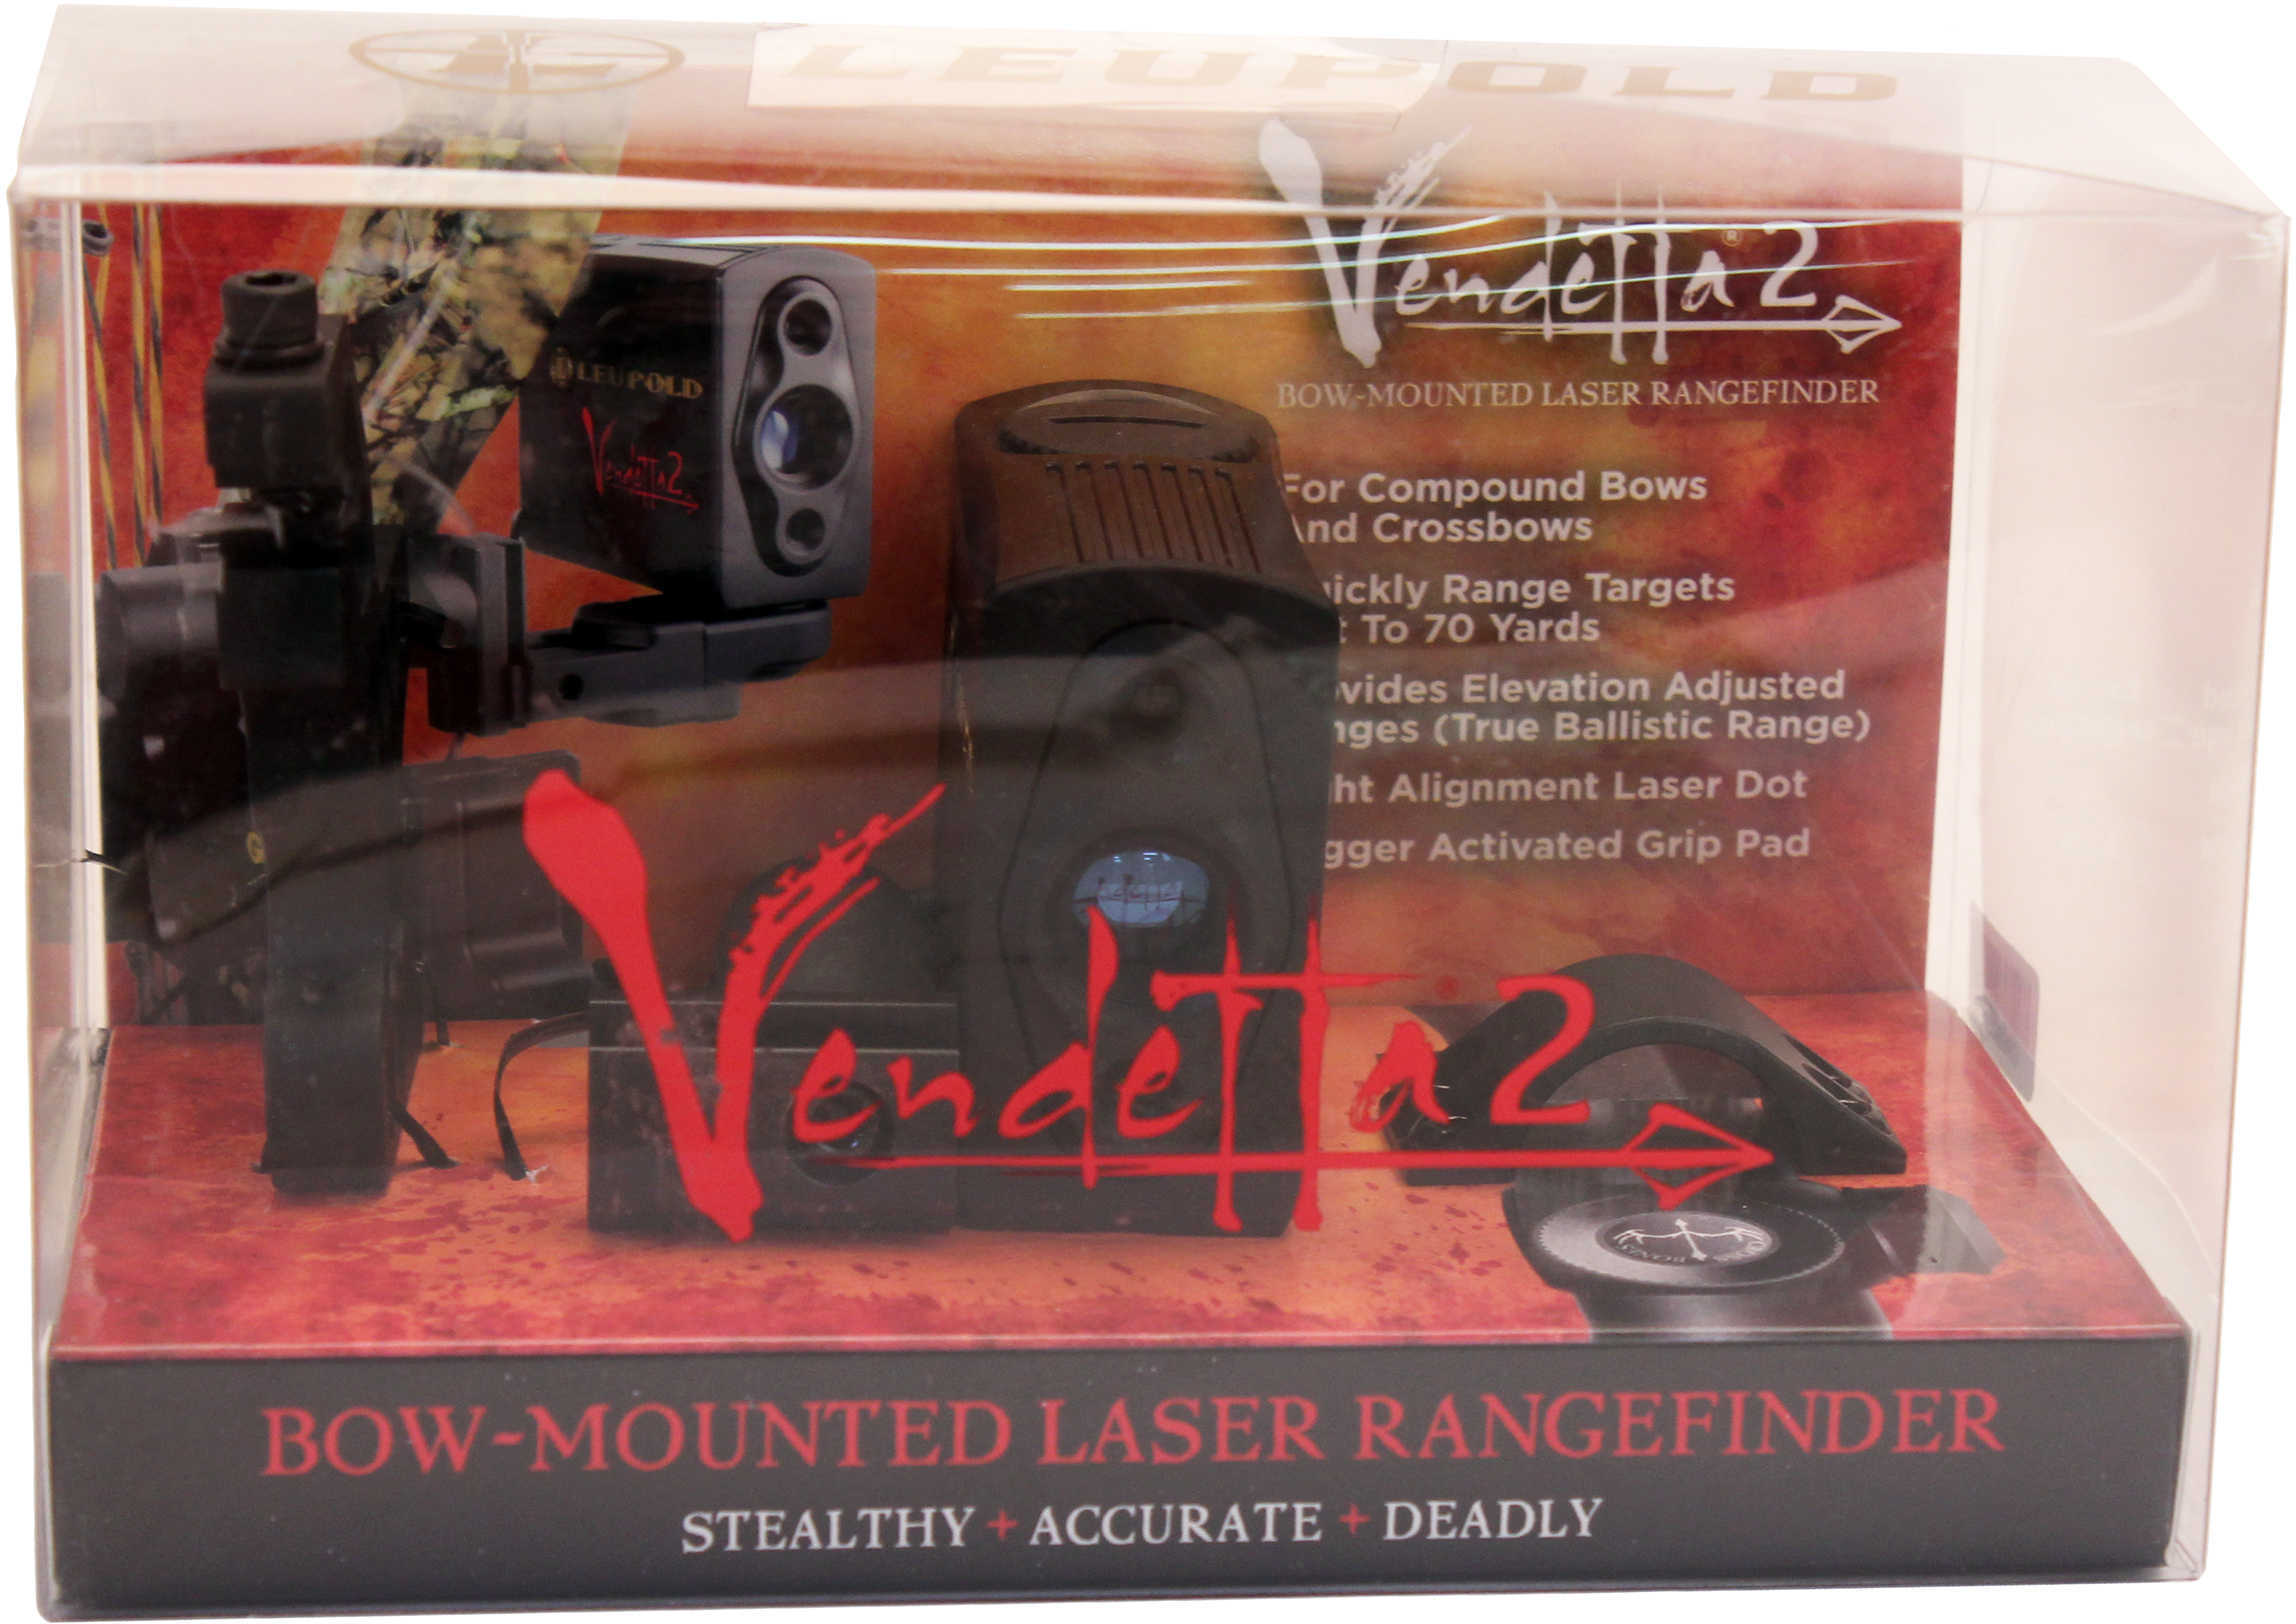 Leupold Vendetta 2 Rangefinder Black Model: 170323